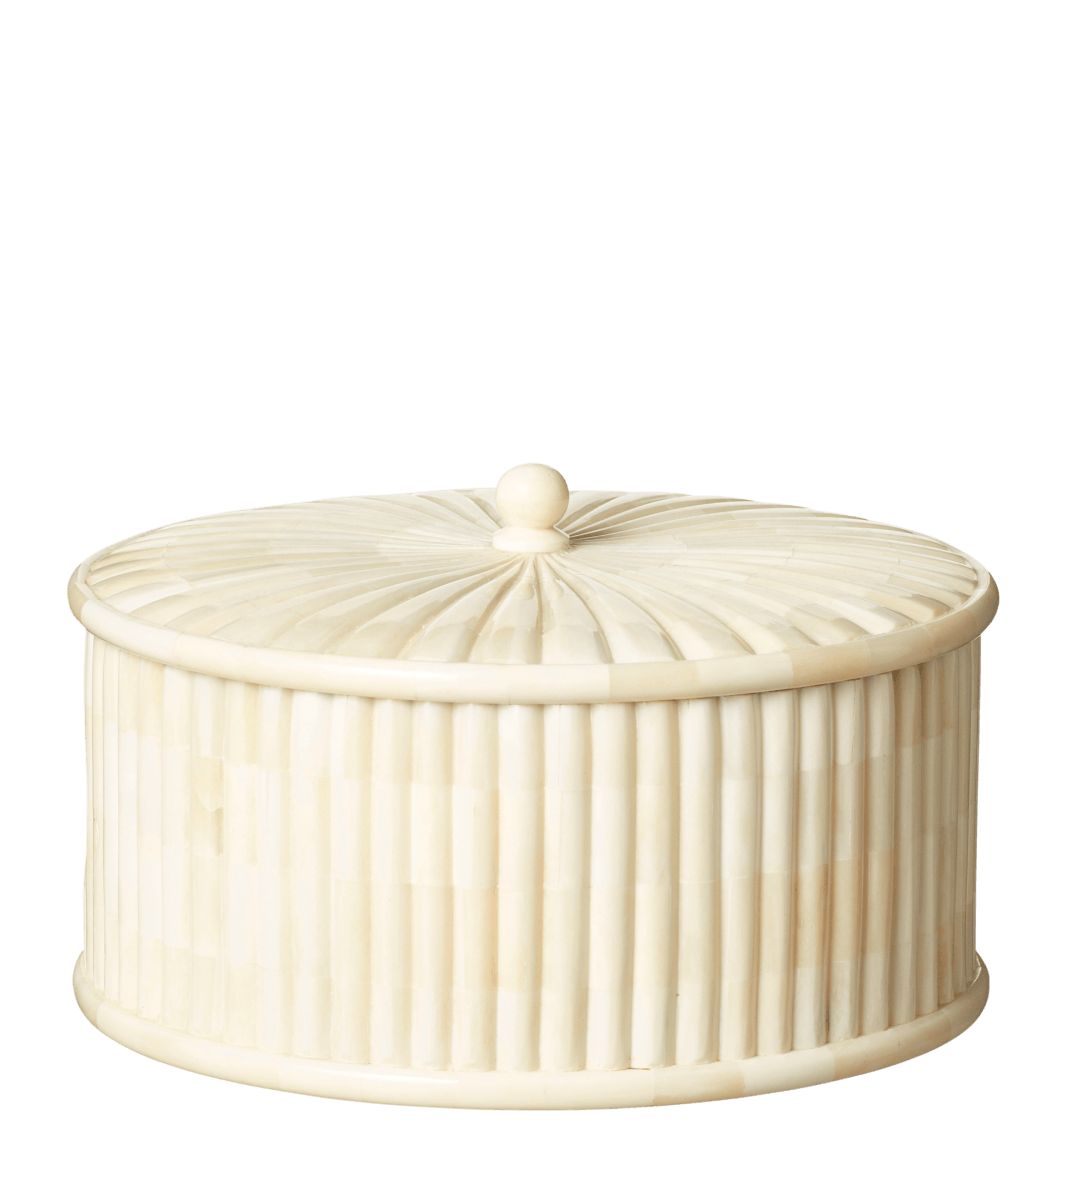 Decimus Round Bone Box With Lid - Ivory White | OKA US